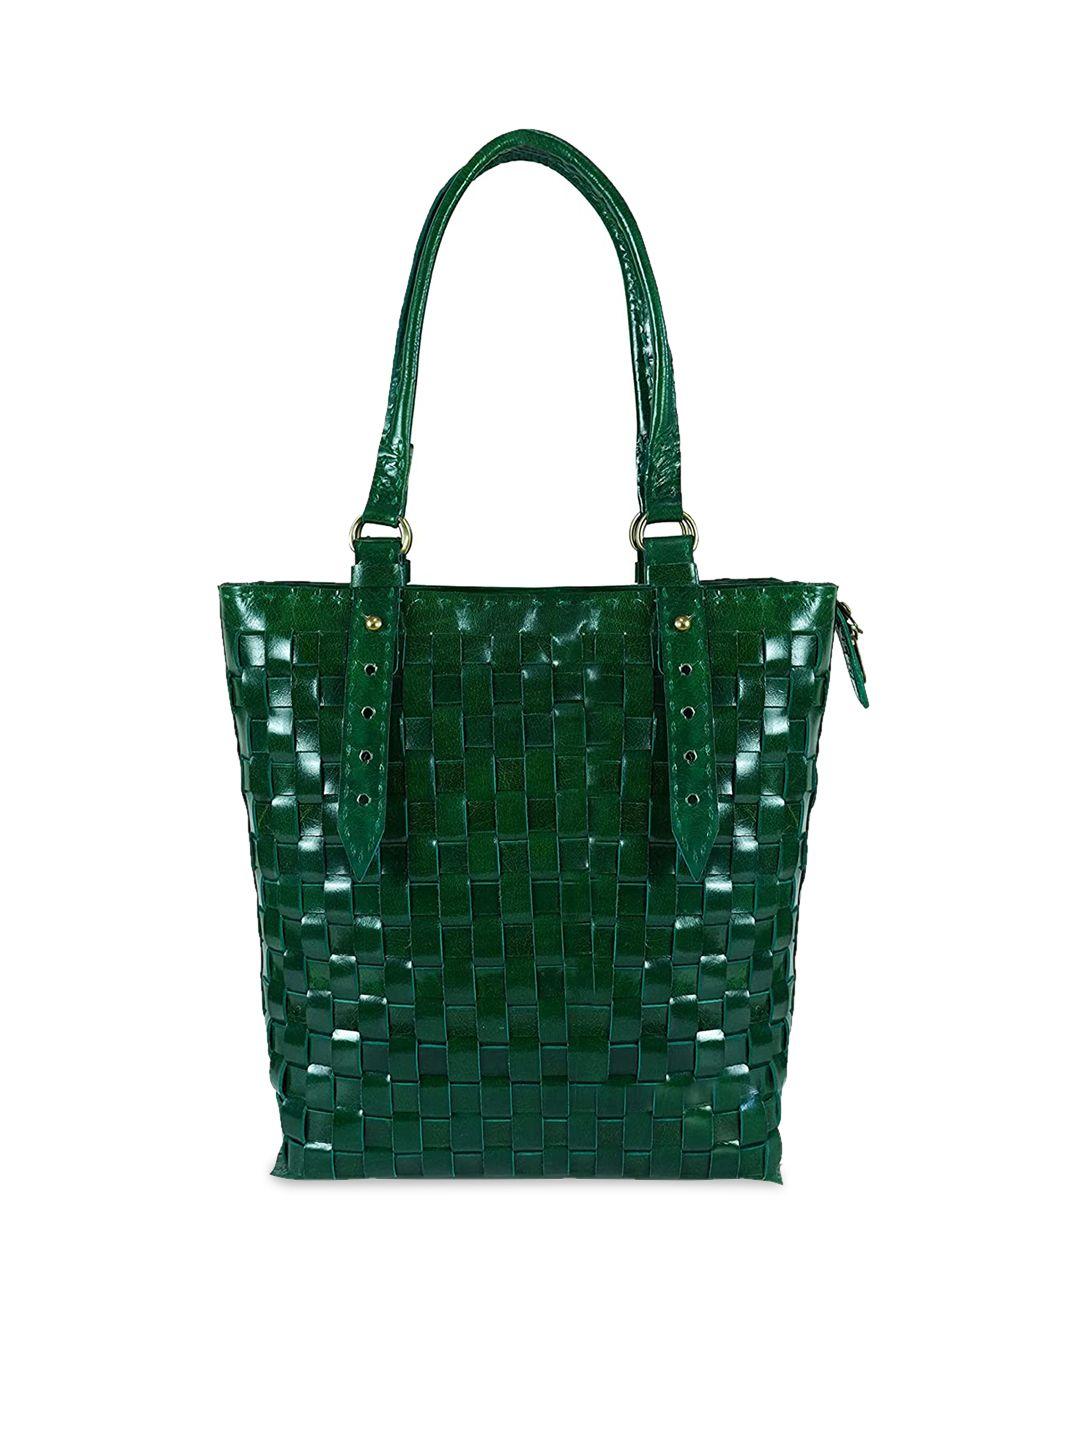 goatter women green textured leather oversized structured knitting work handheld bag